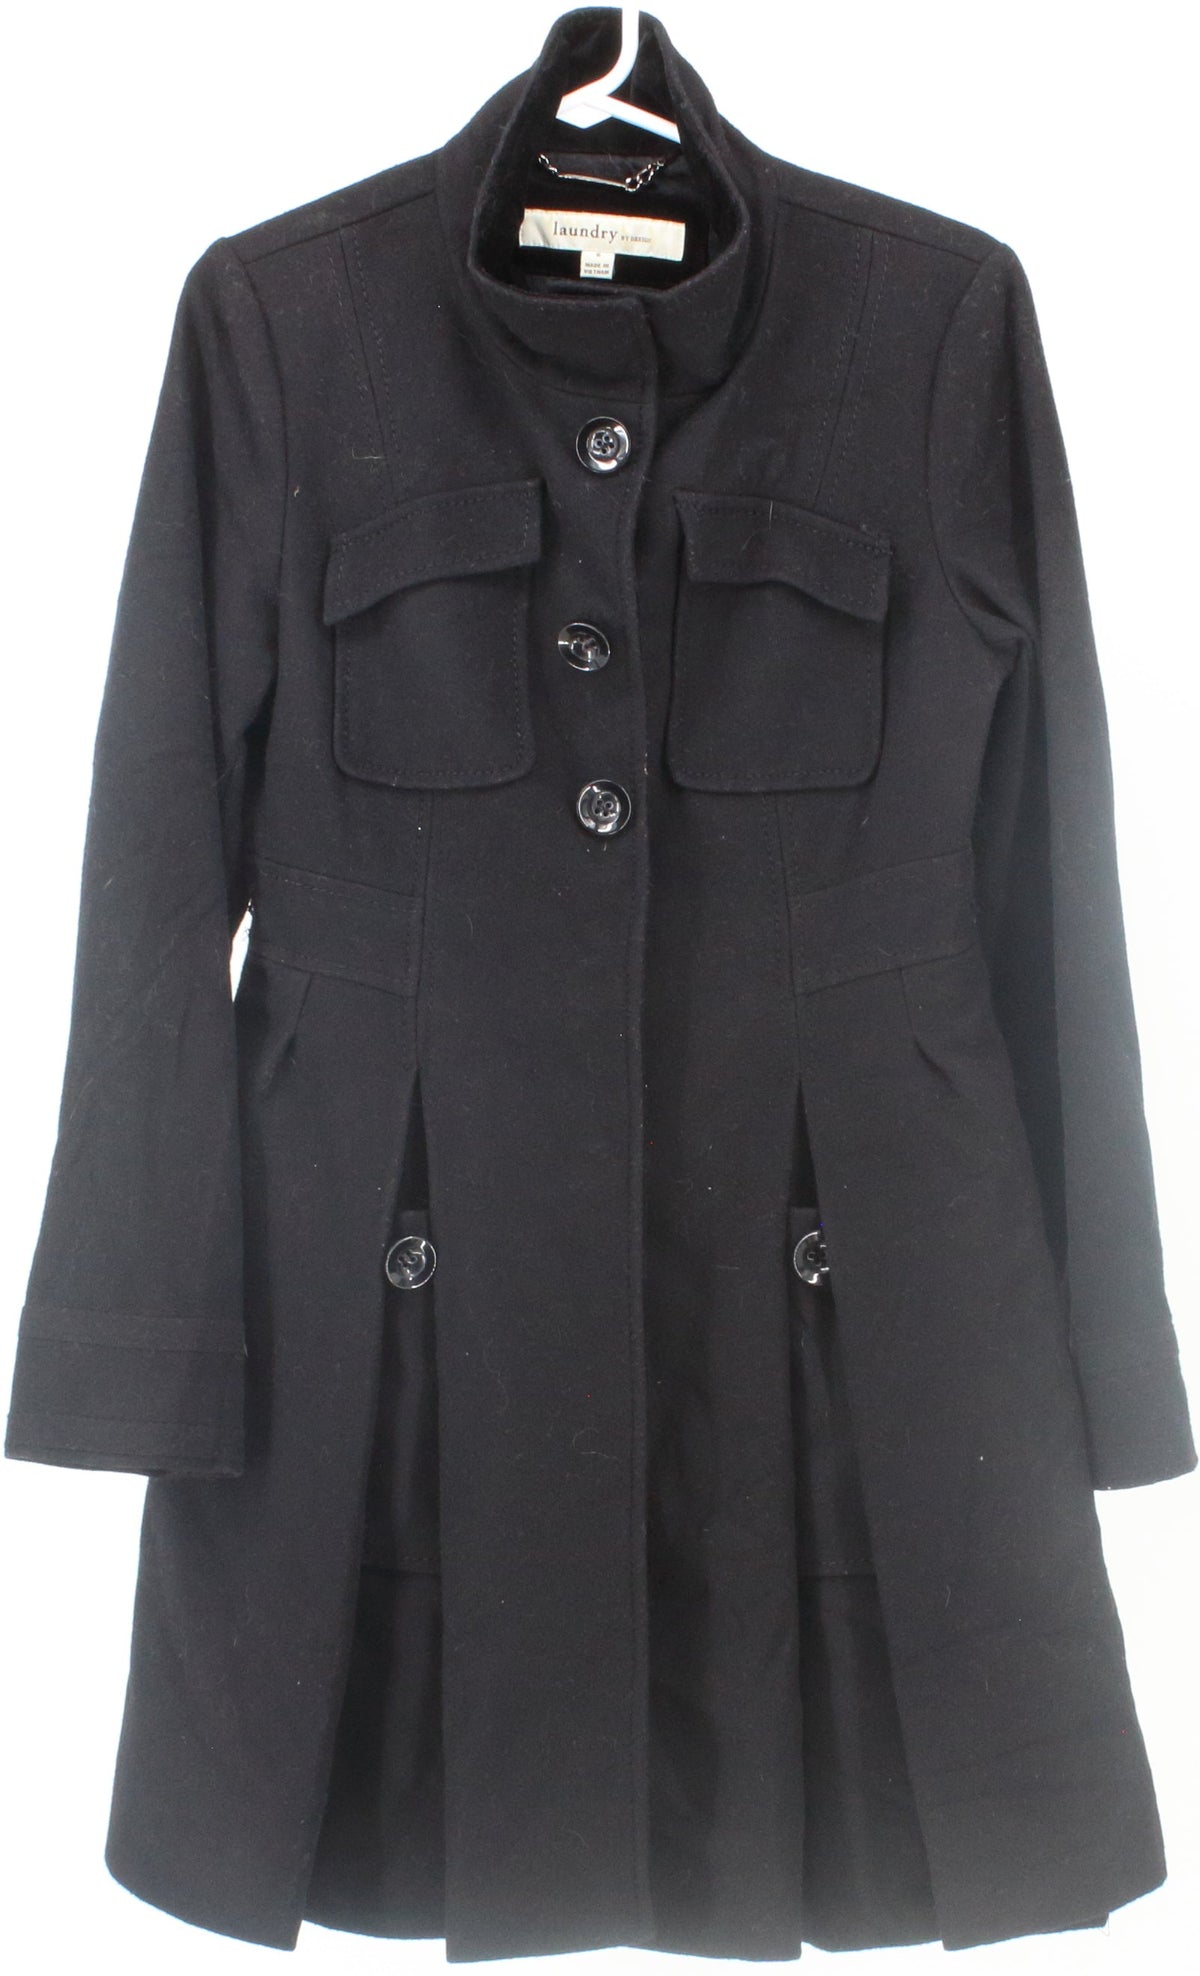 Lanudry Black Stylish Women's Coat